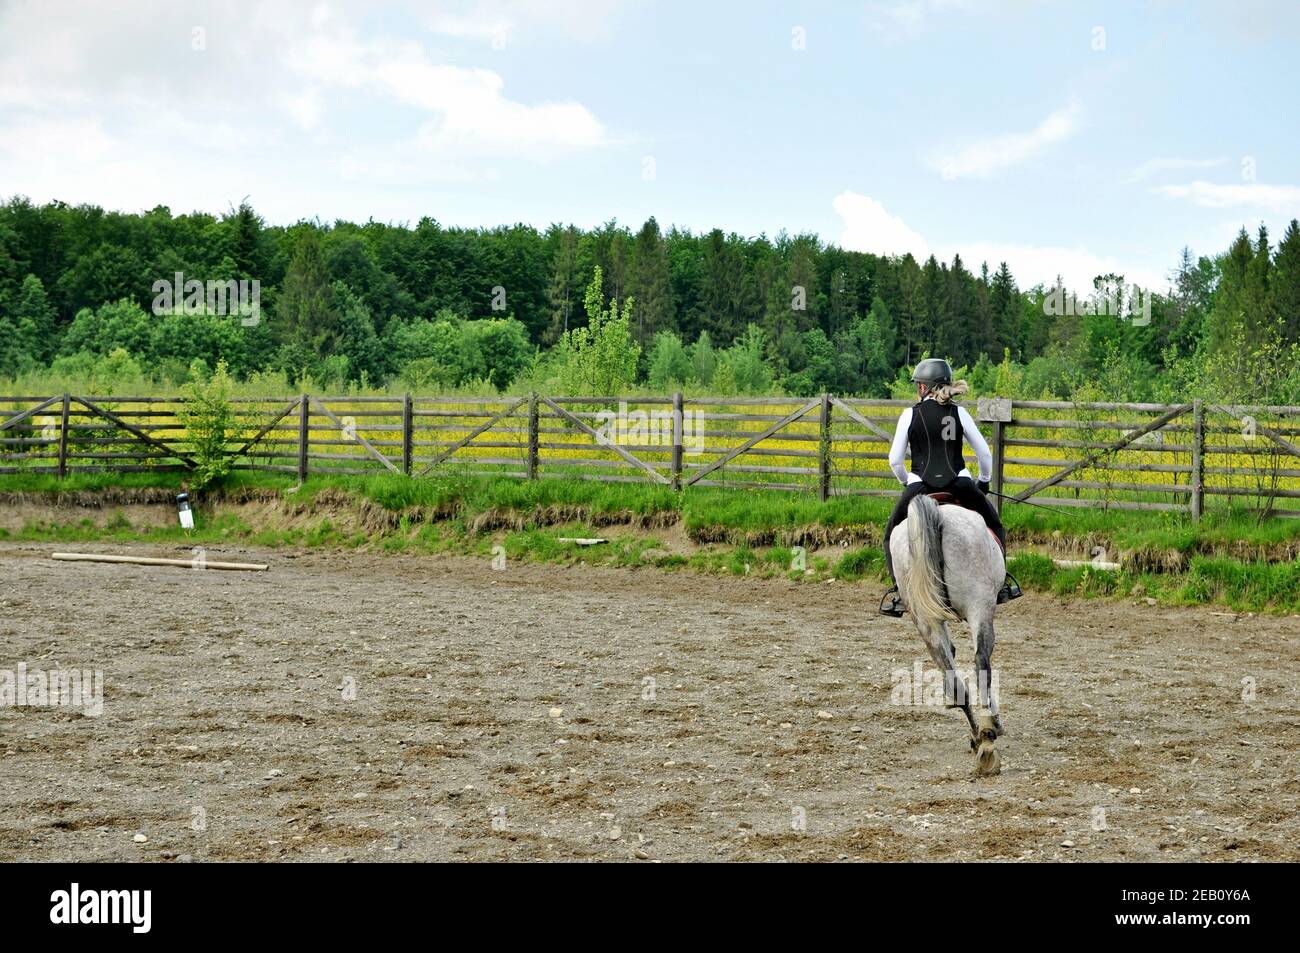 Woman jockey riding a white horse at a farm. Stock Photo